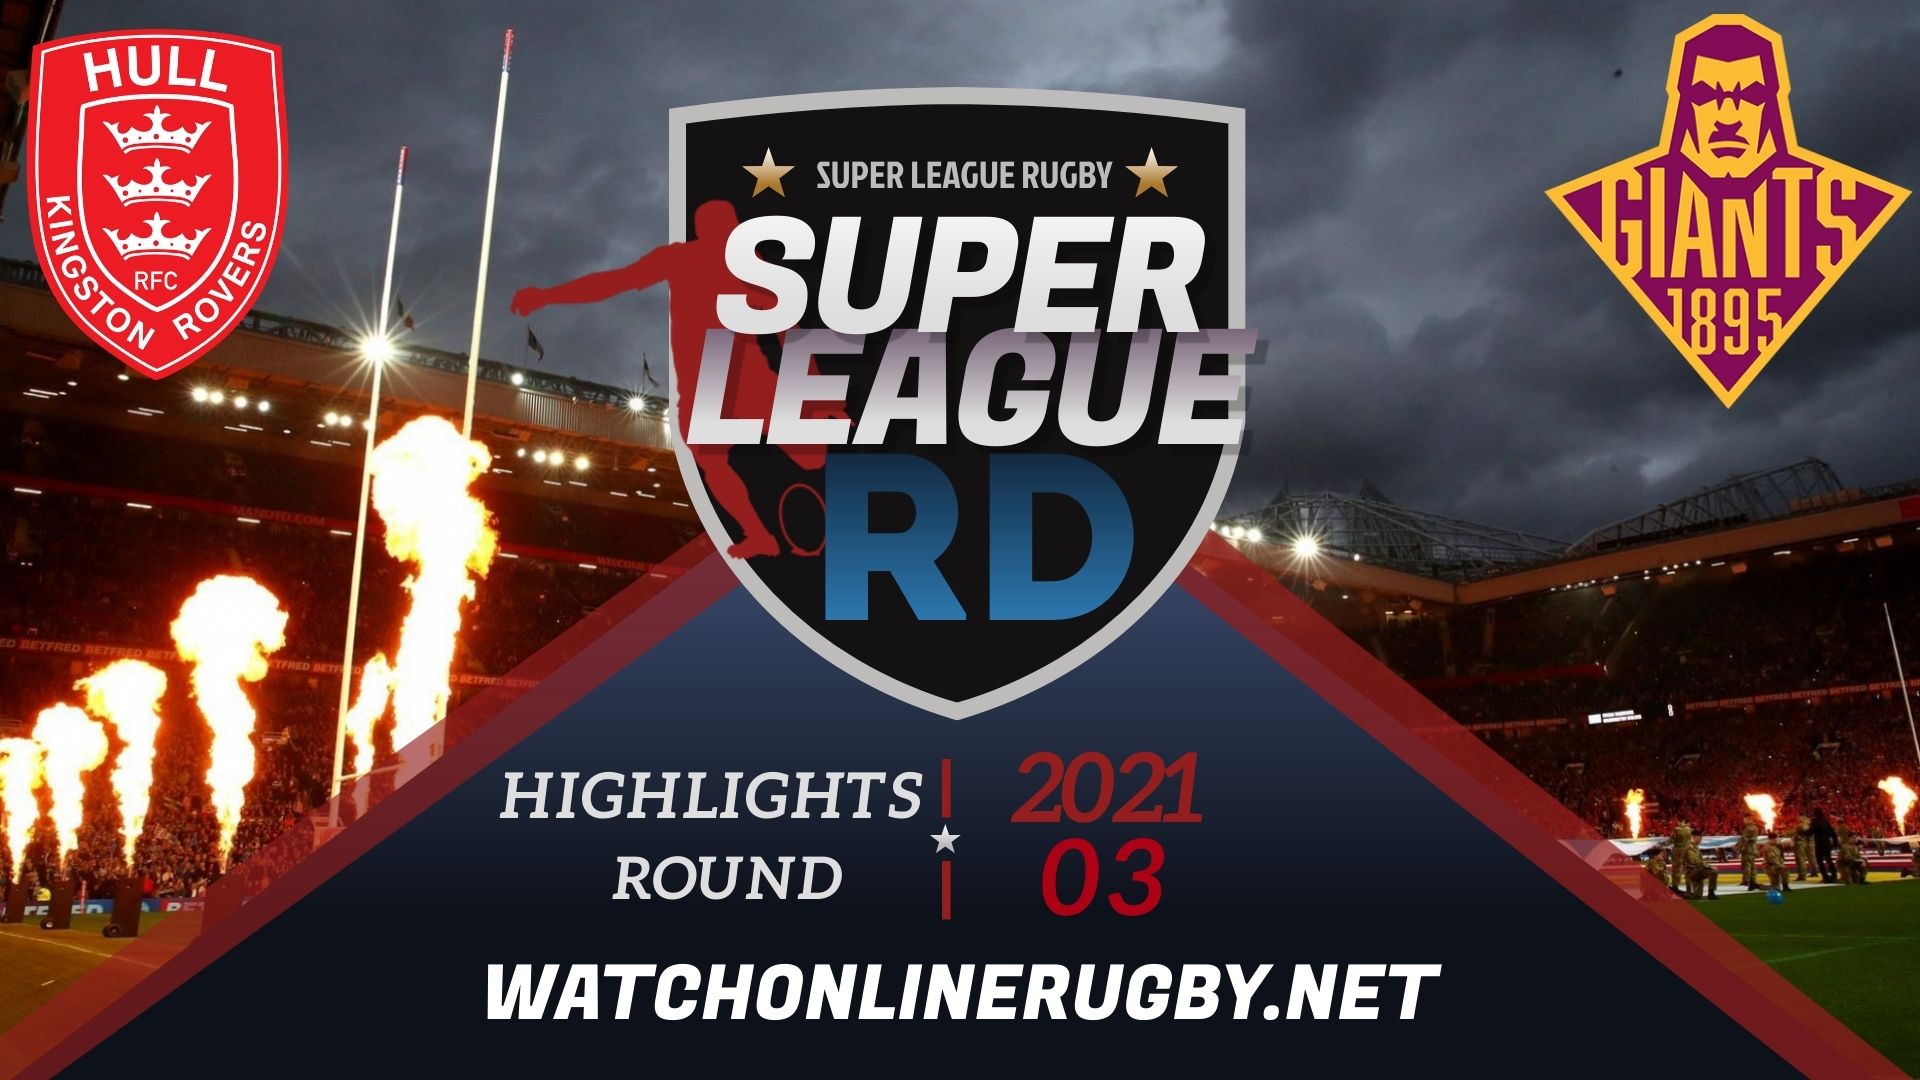 Hull KR Vs Huddersfield Giants Super League Rugby 2021 RD 3